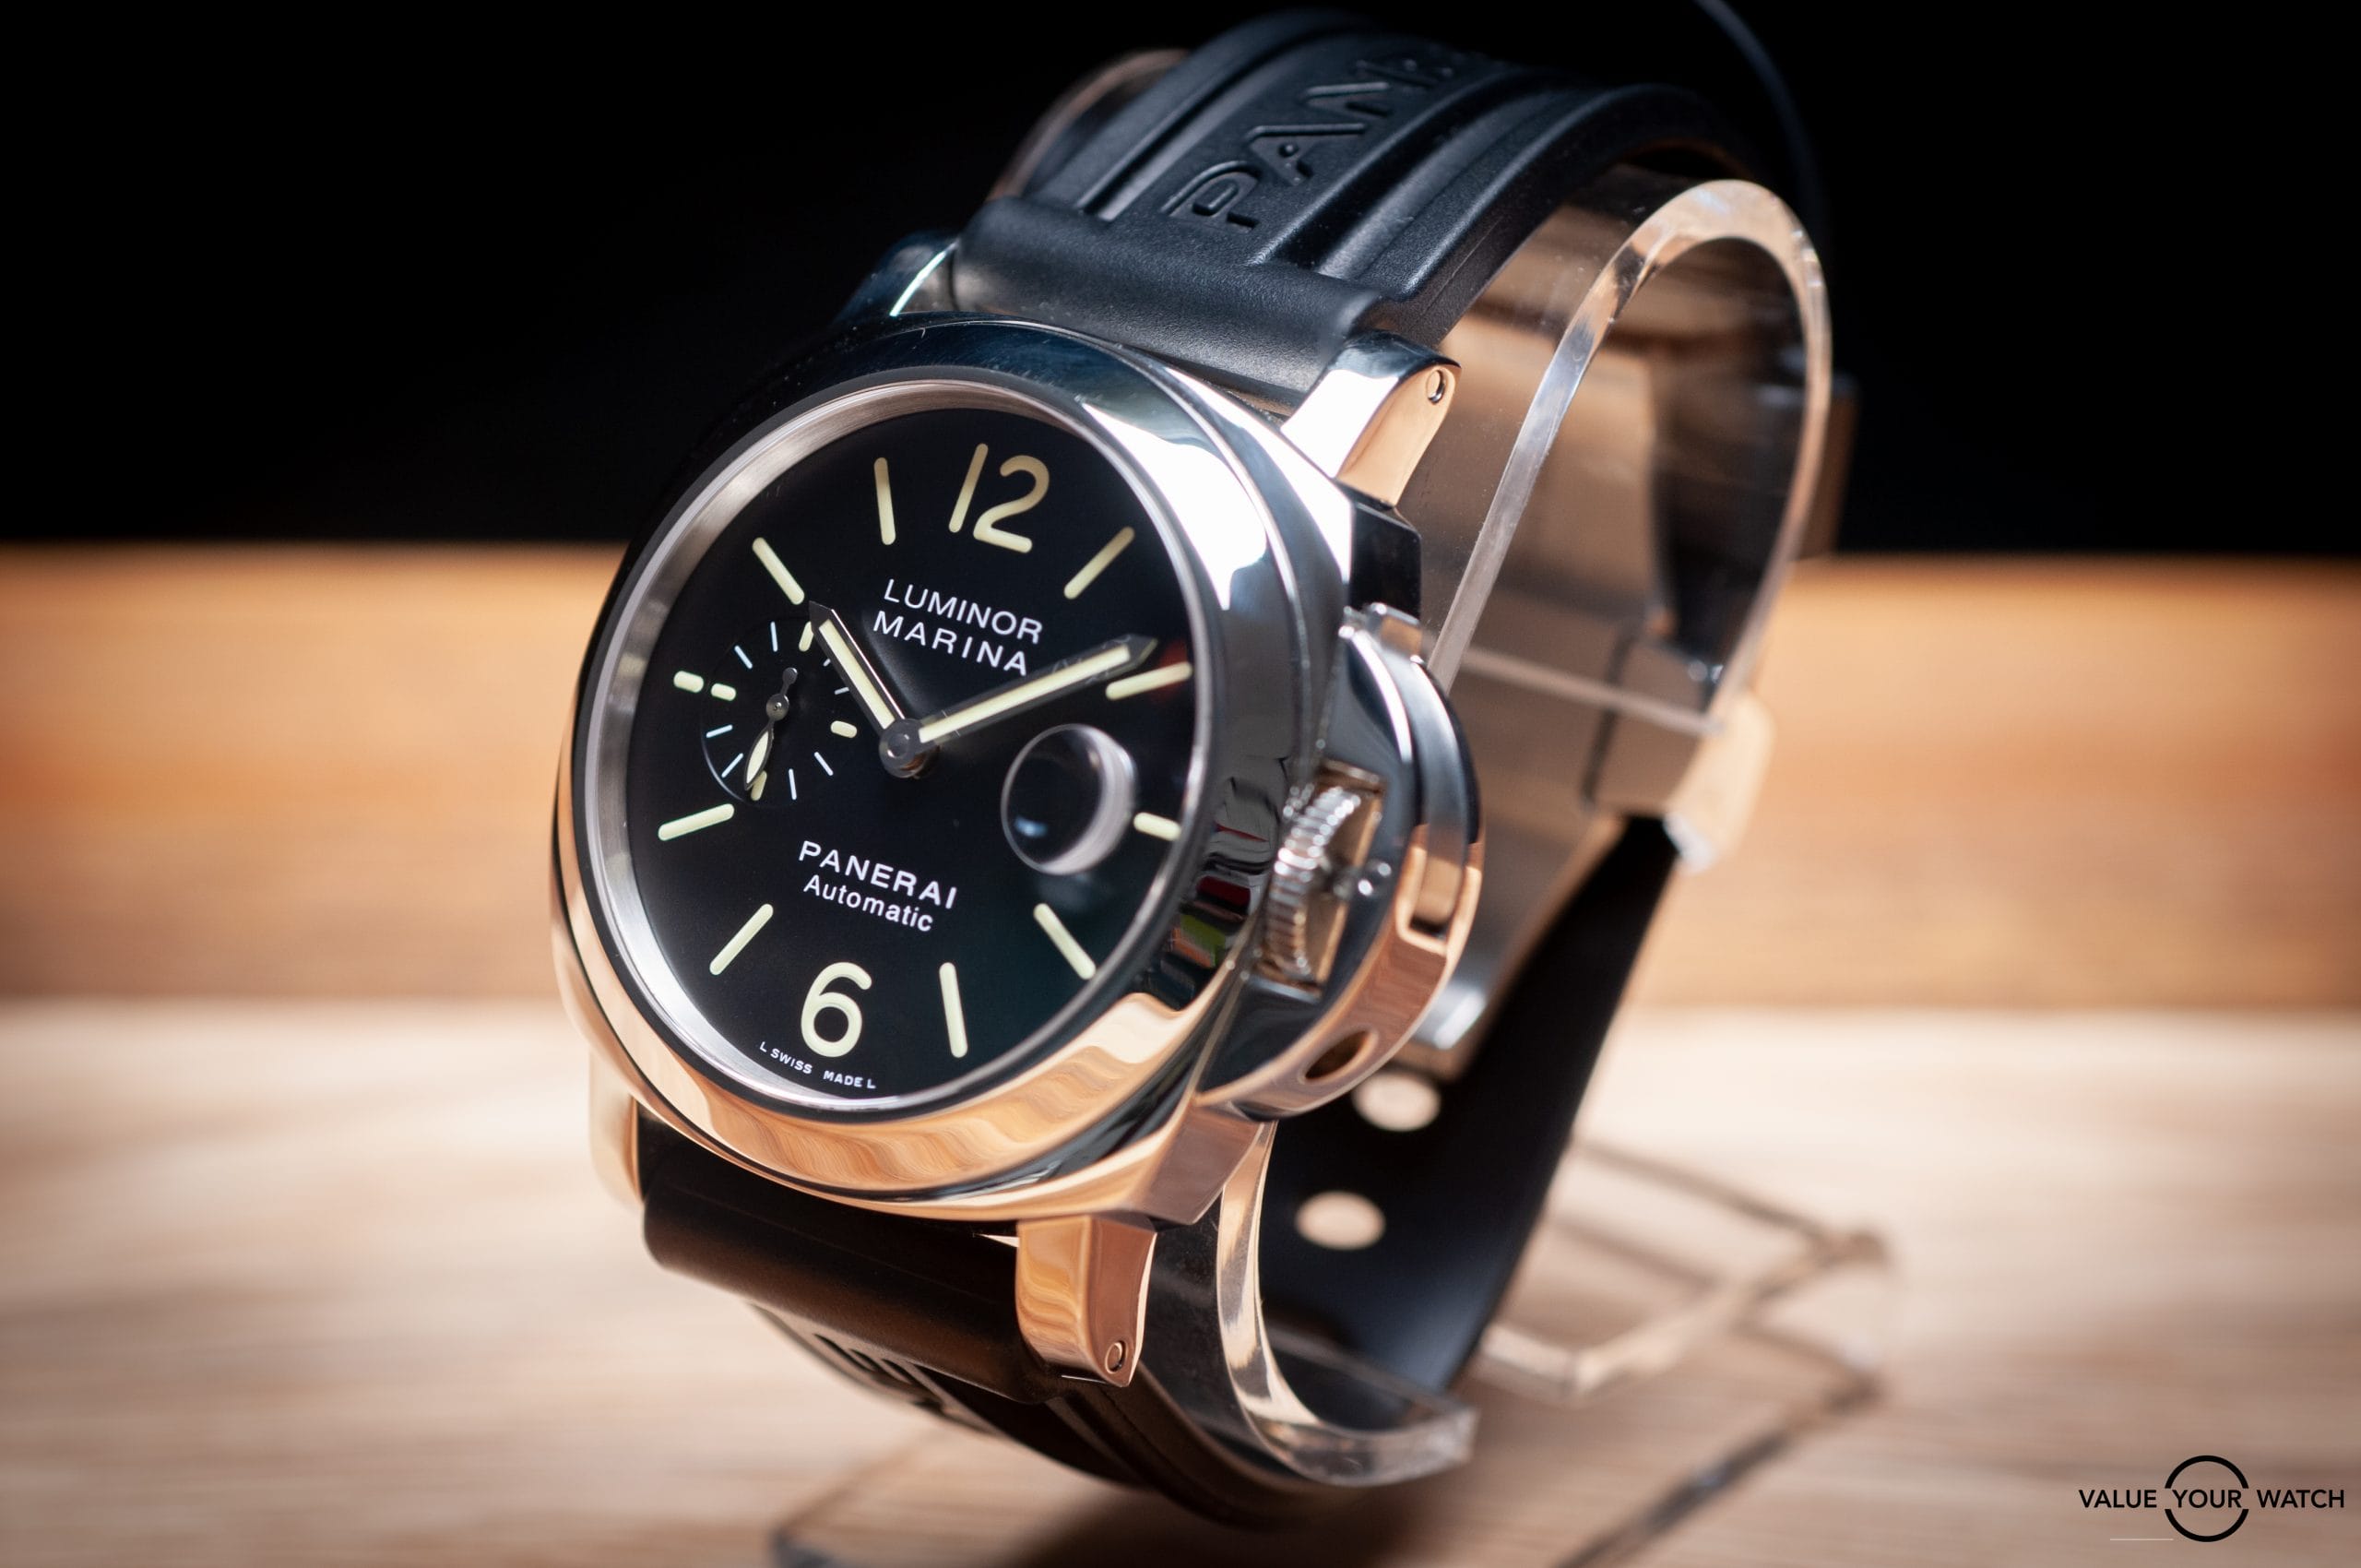 Panerai Luminor Marina 1950 PAM00104 : Value Your Watch